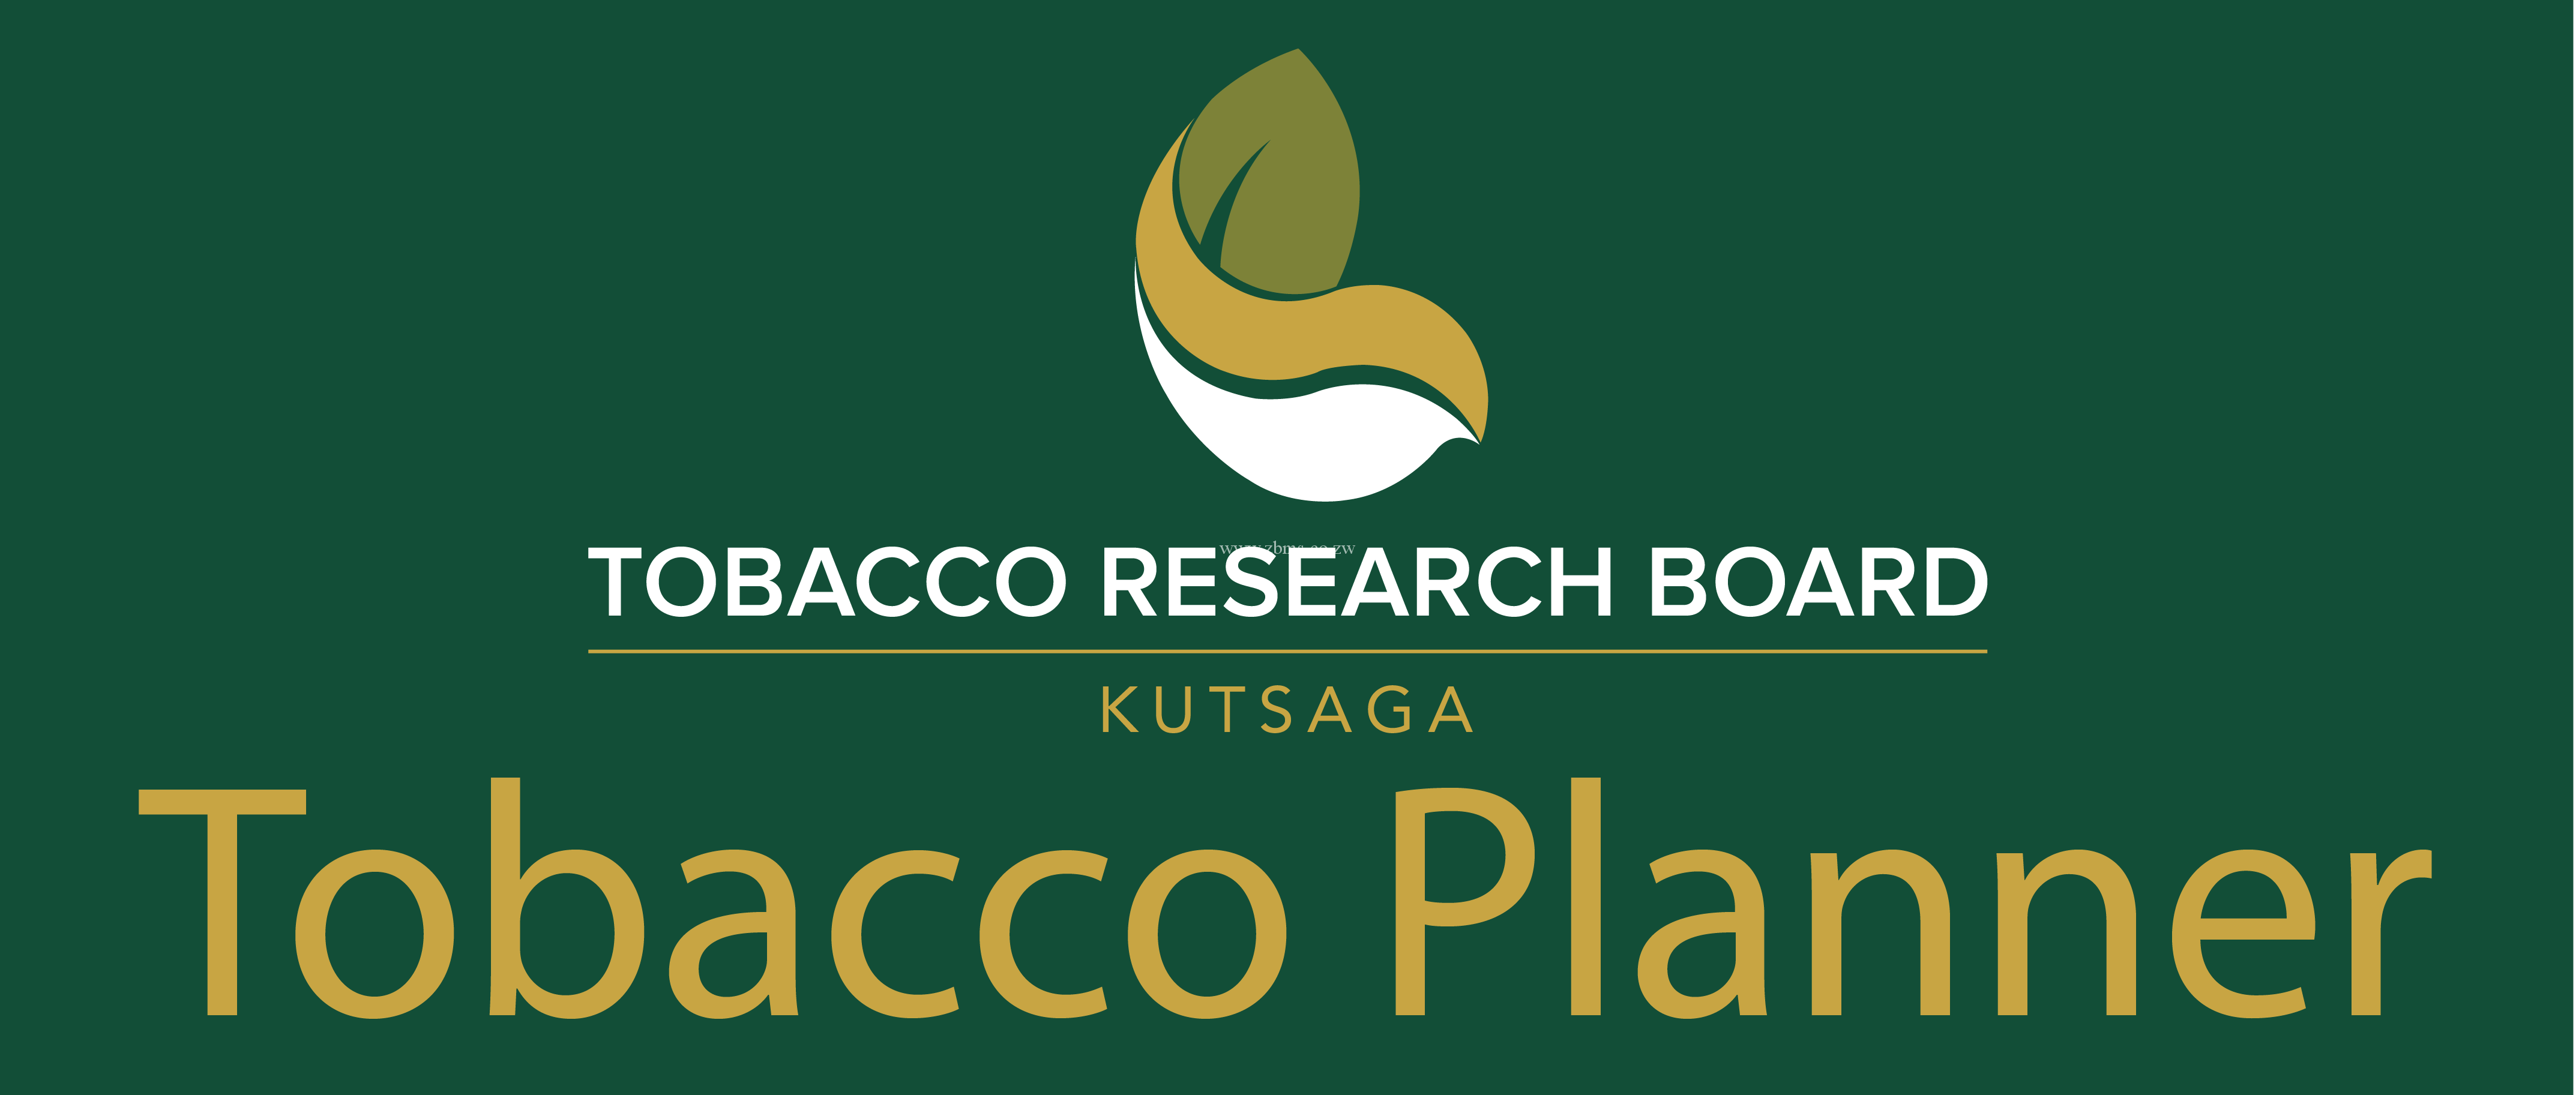 kutsaga tobacco research board zimbabwe